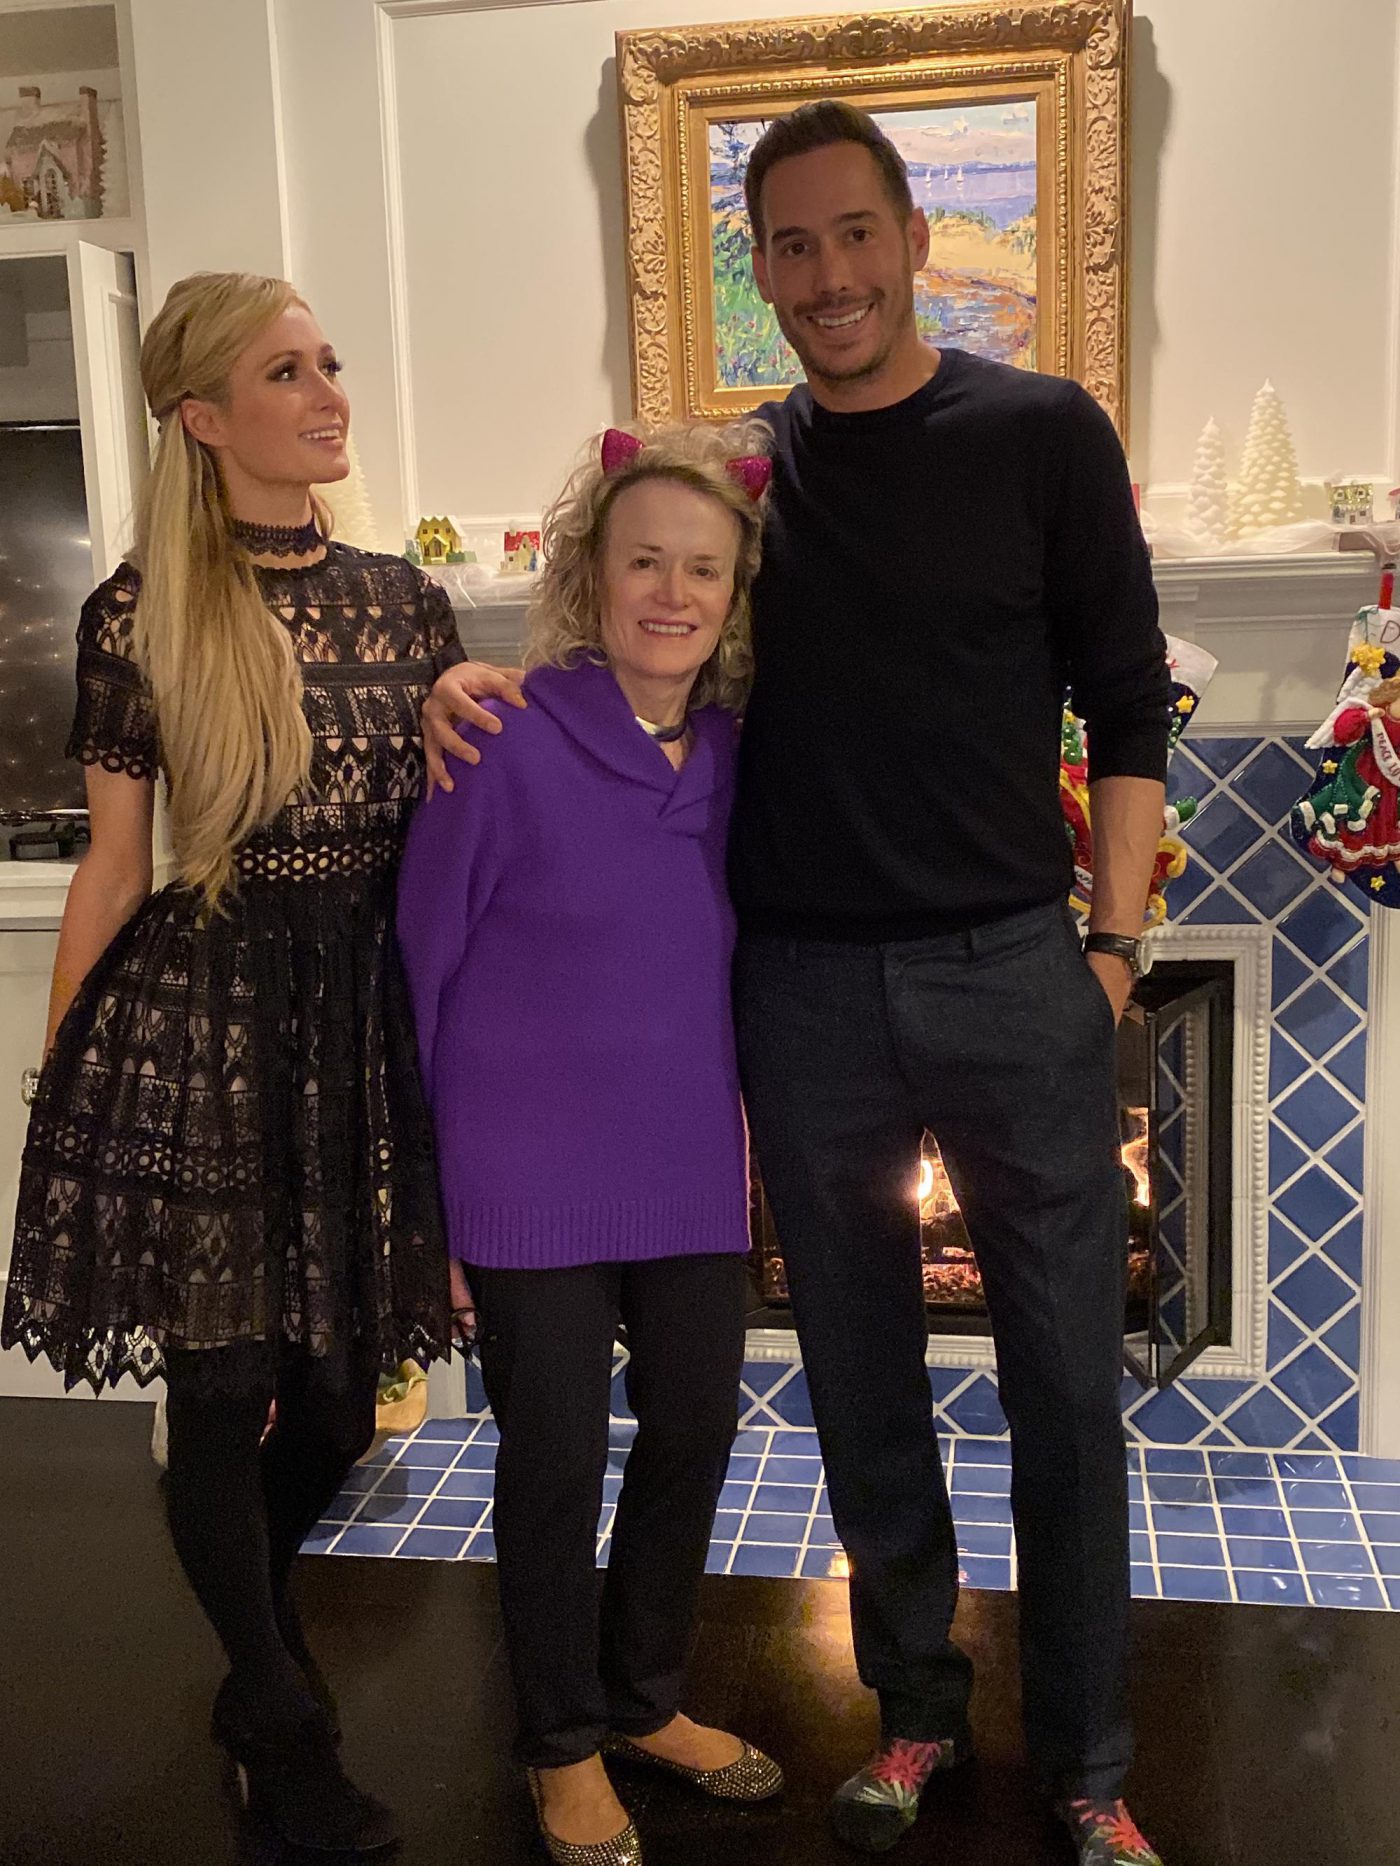 Paris and Carter with Carter's mom, Sherri, Christmas 2019